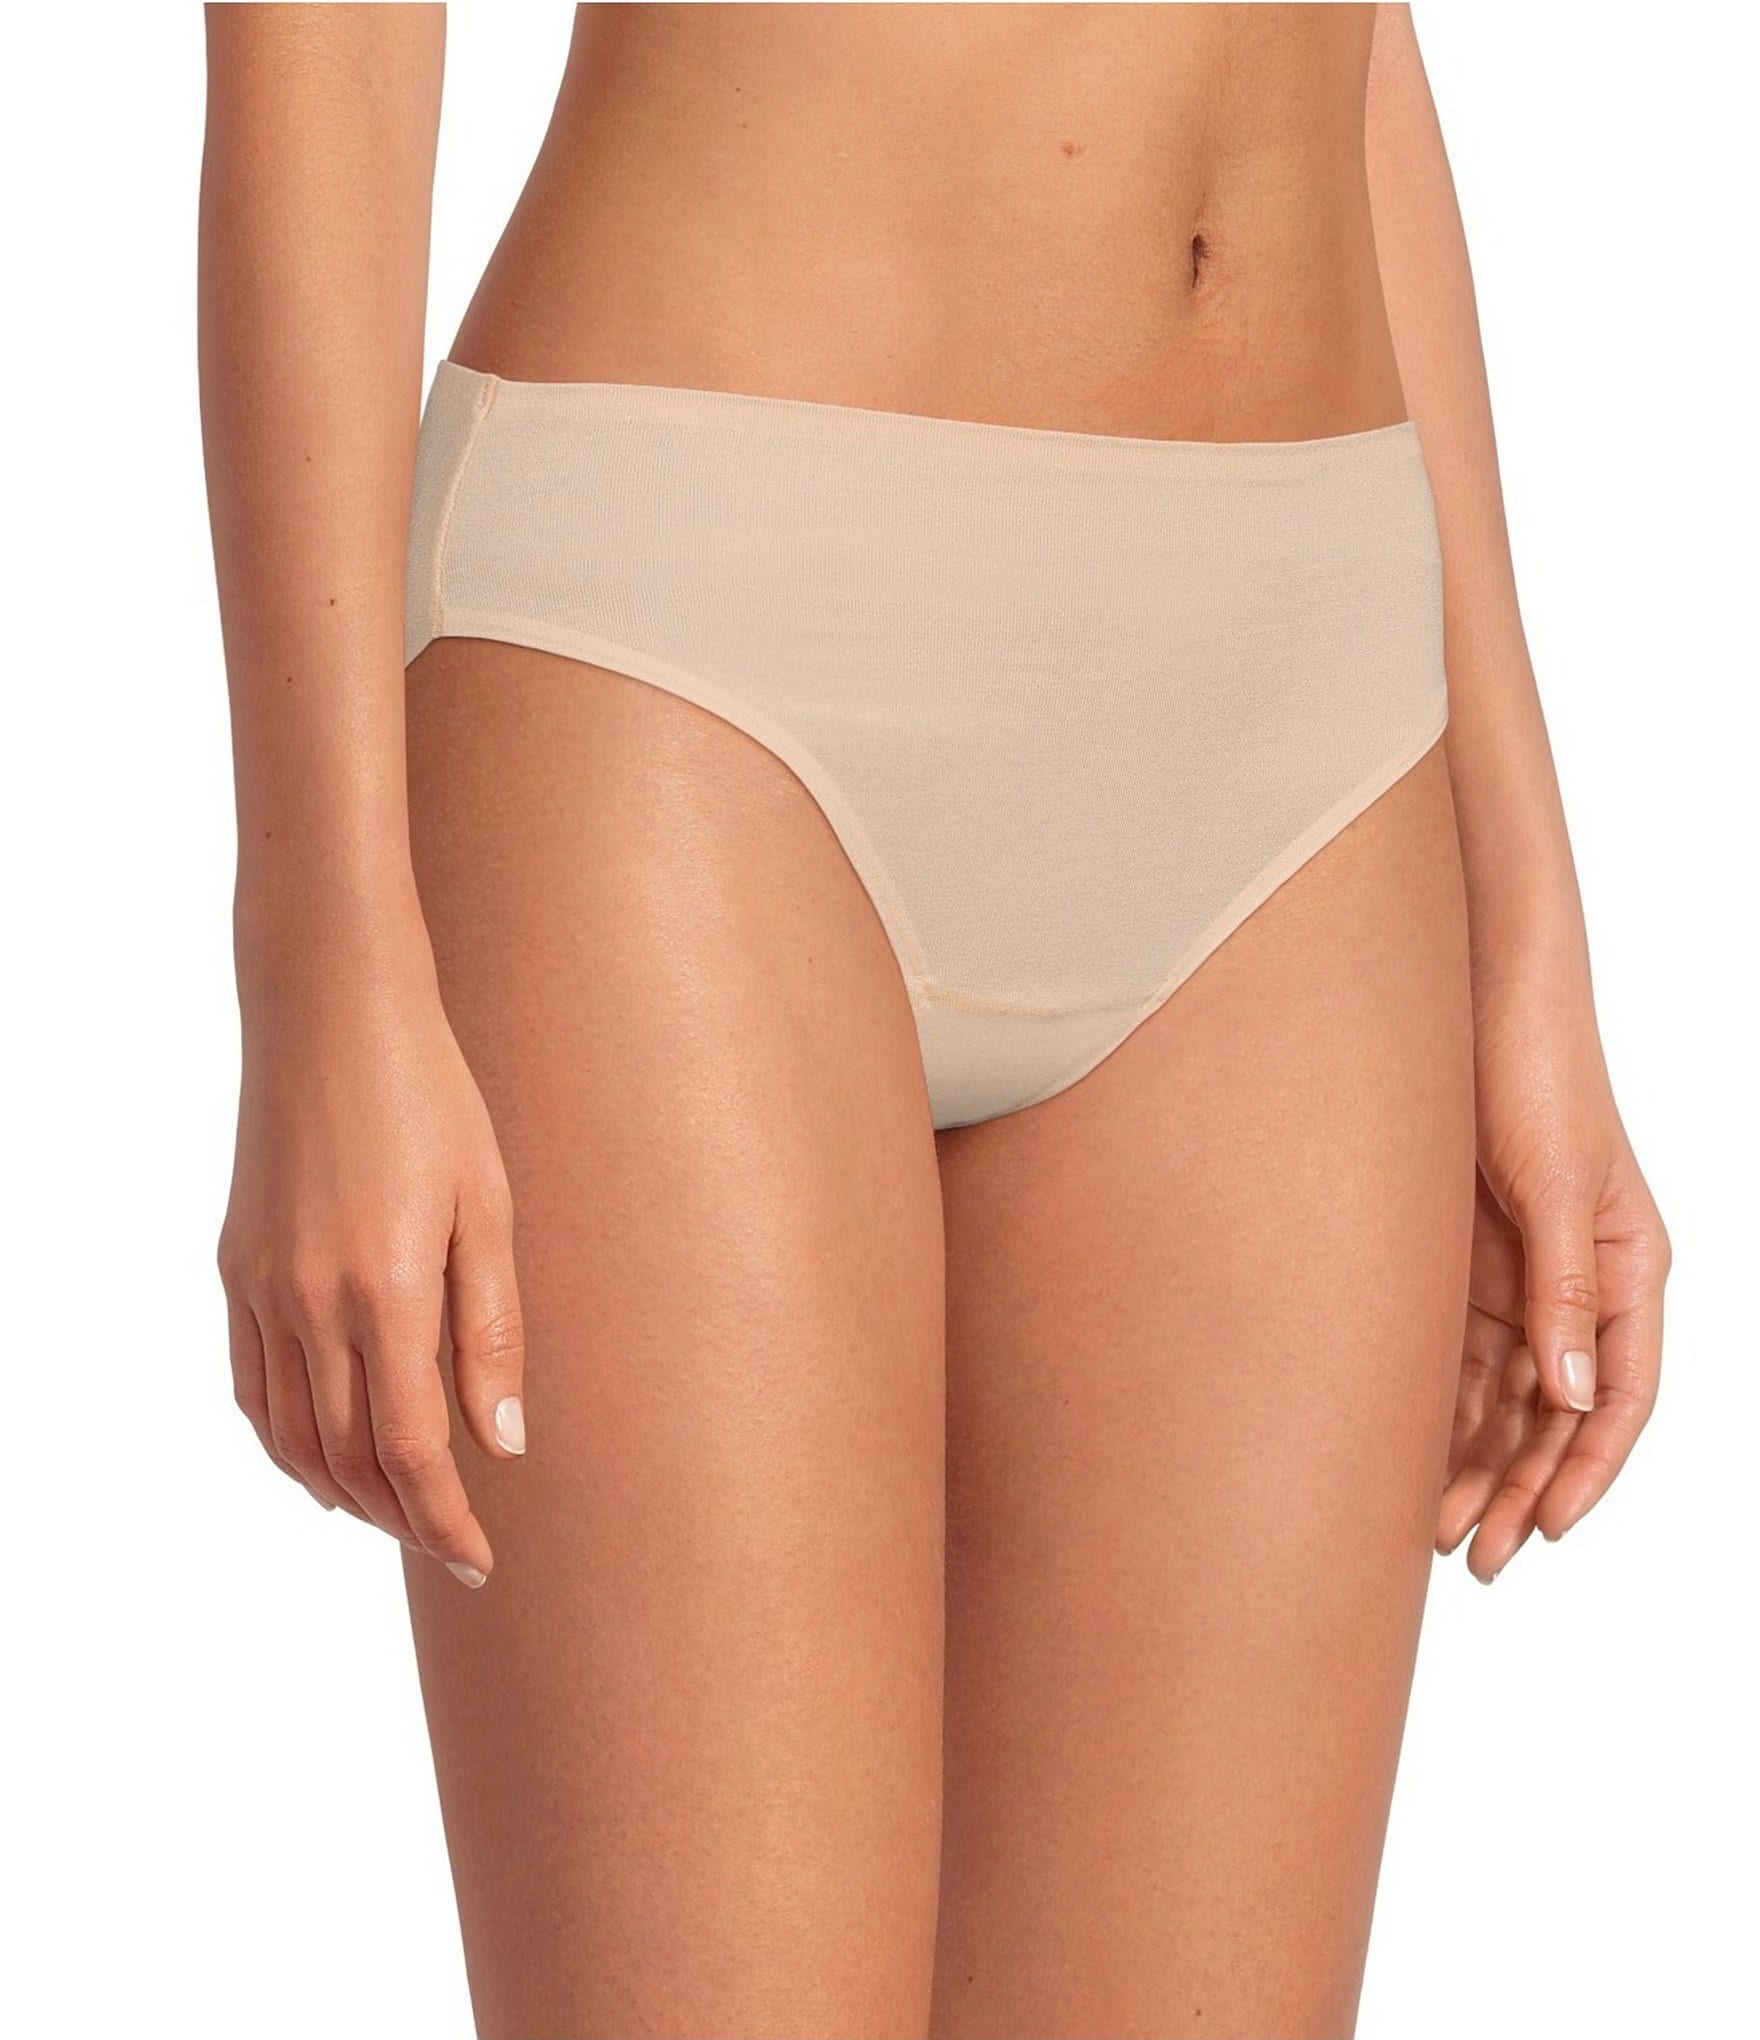 Women's Underwear Cotton Plus Size Panties High Australia